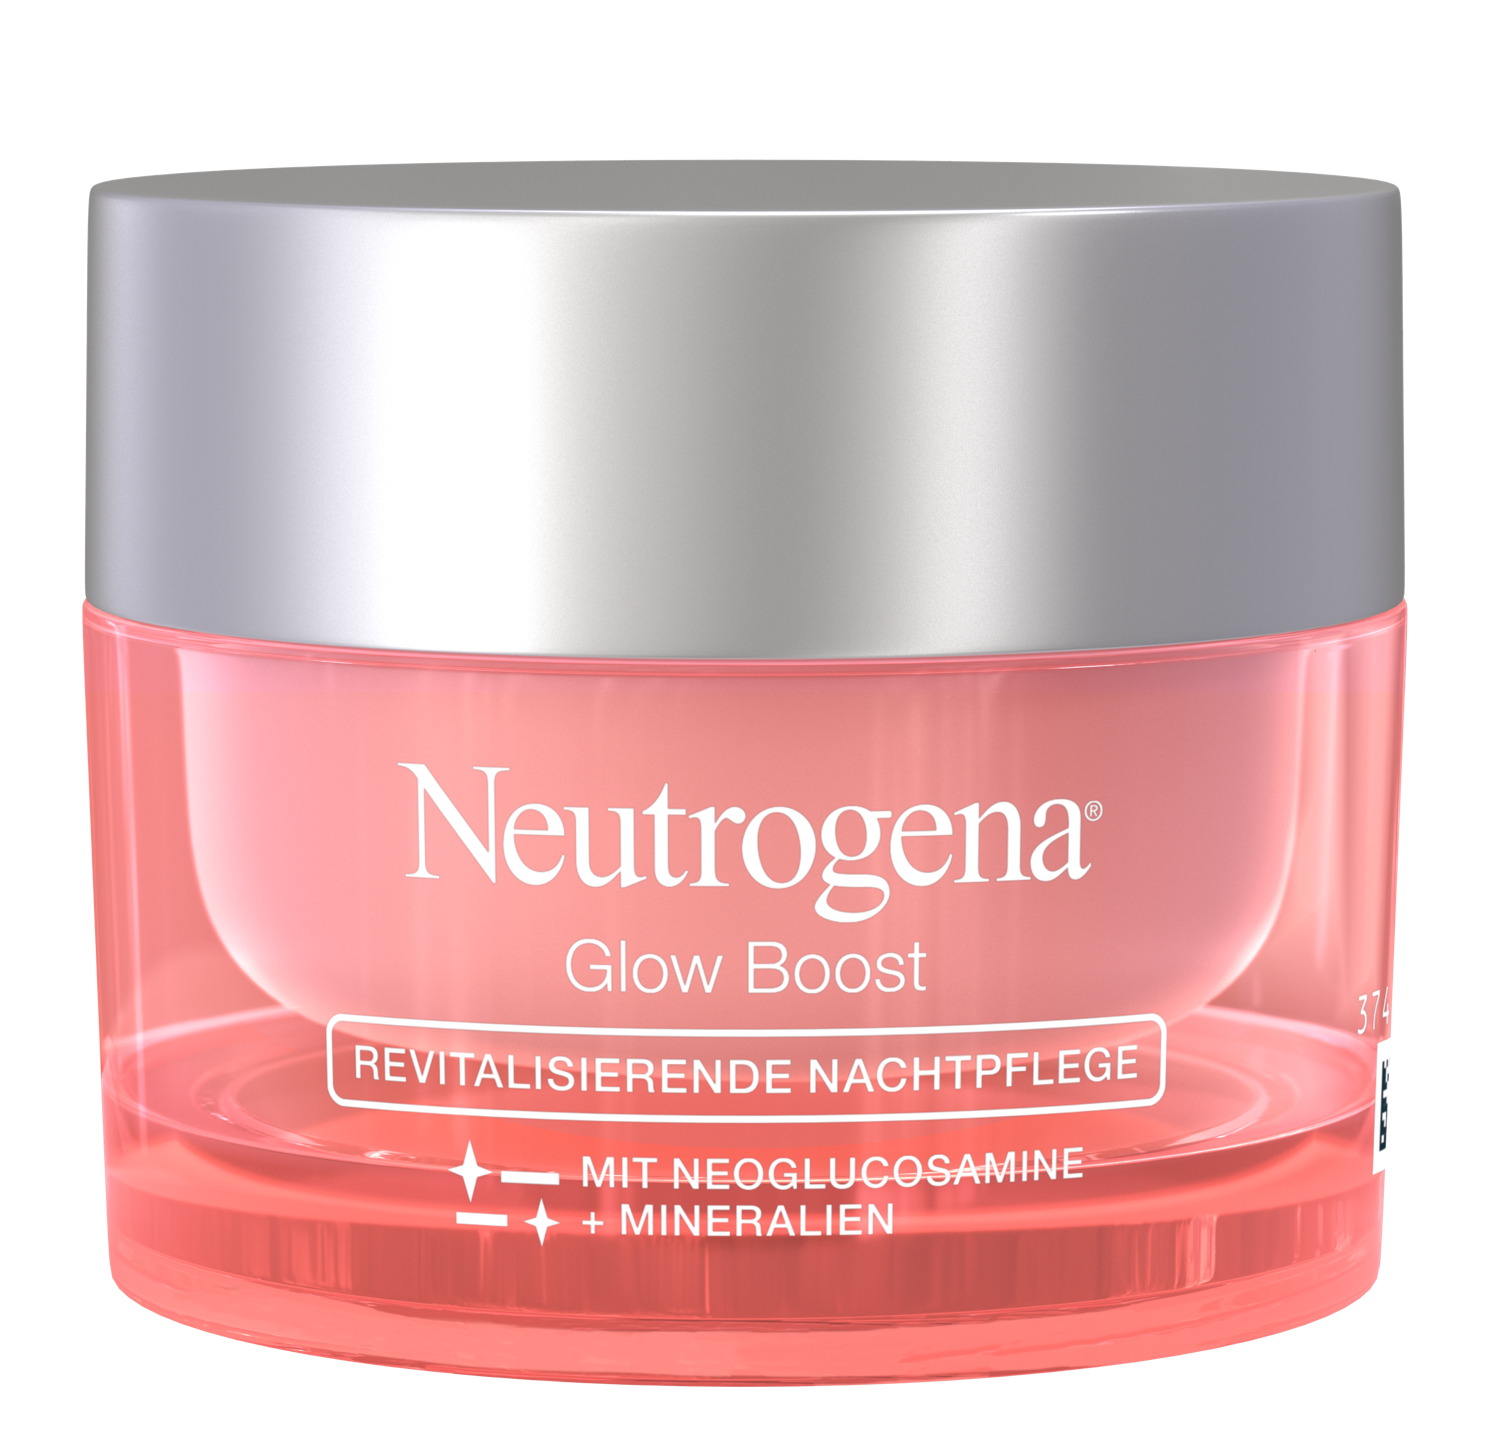 Neutrogena Glow Boost Revitalisierende Nachtpflege, 50 ml, UVP* 12,99 €